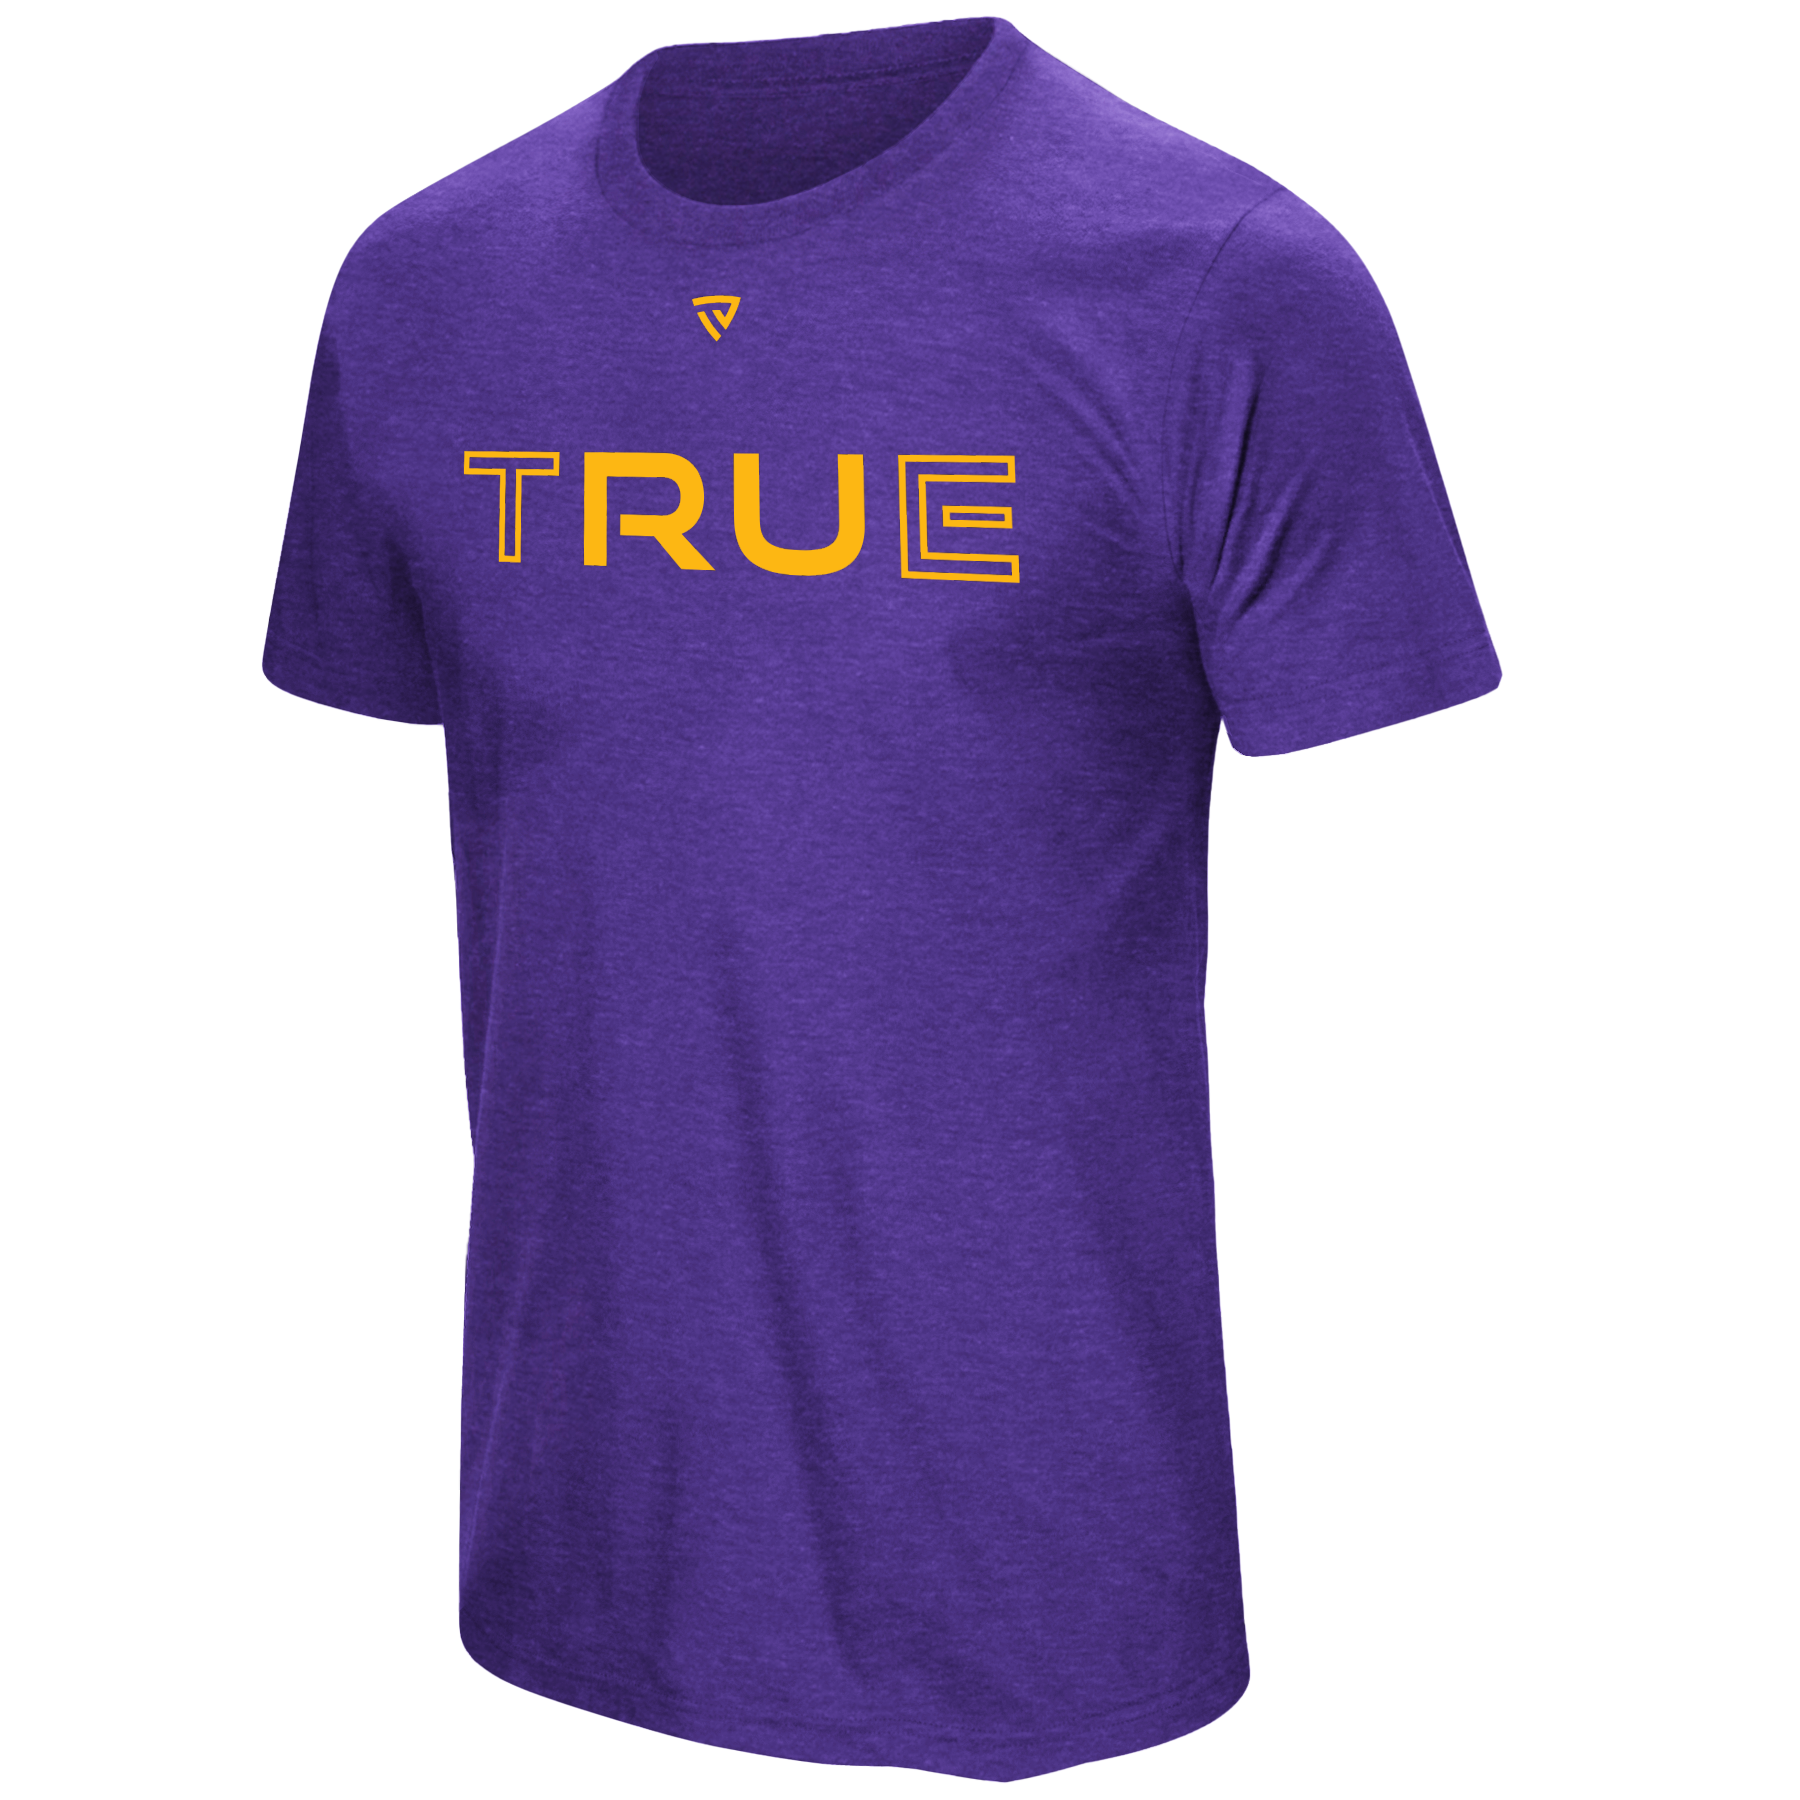 Men's RU TRUE Purple Tee